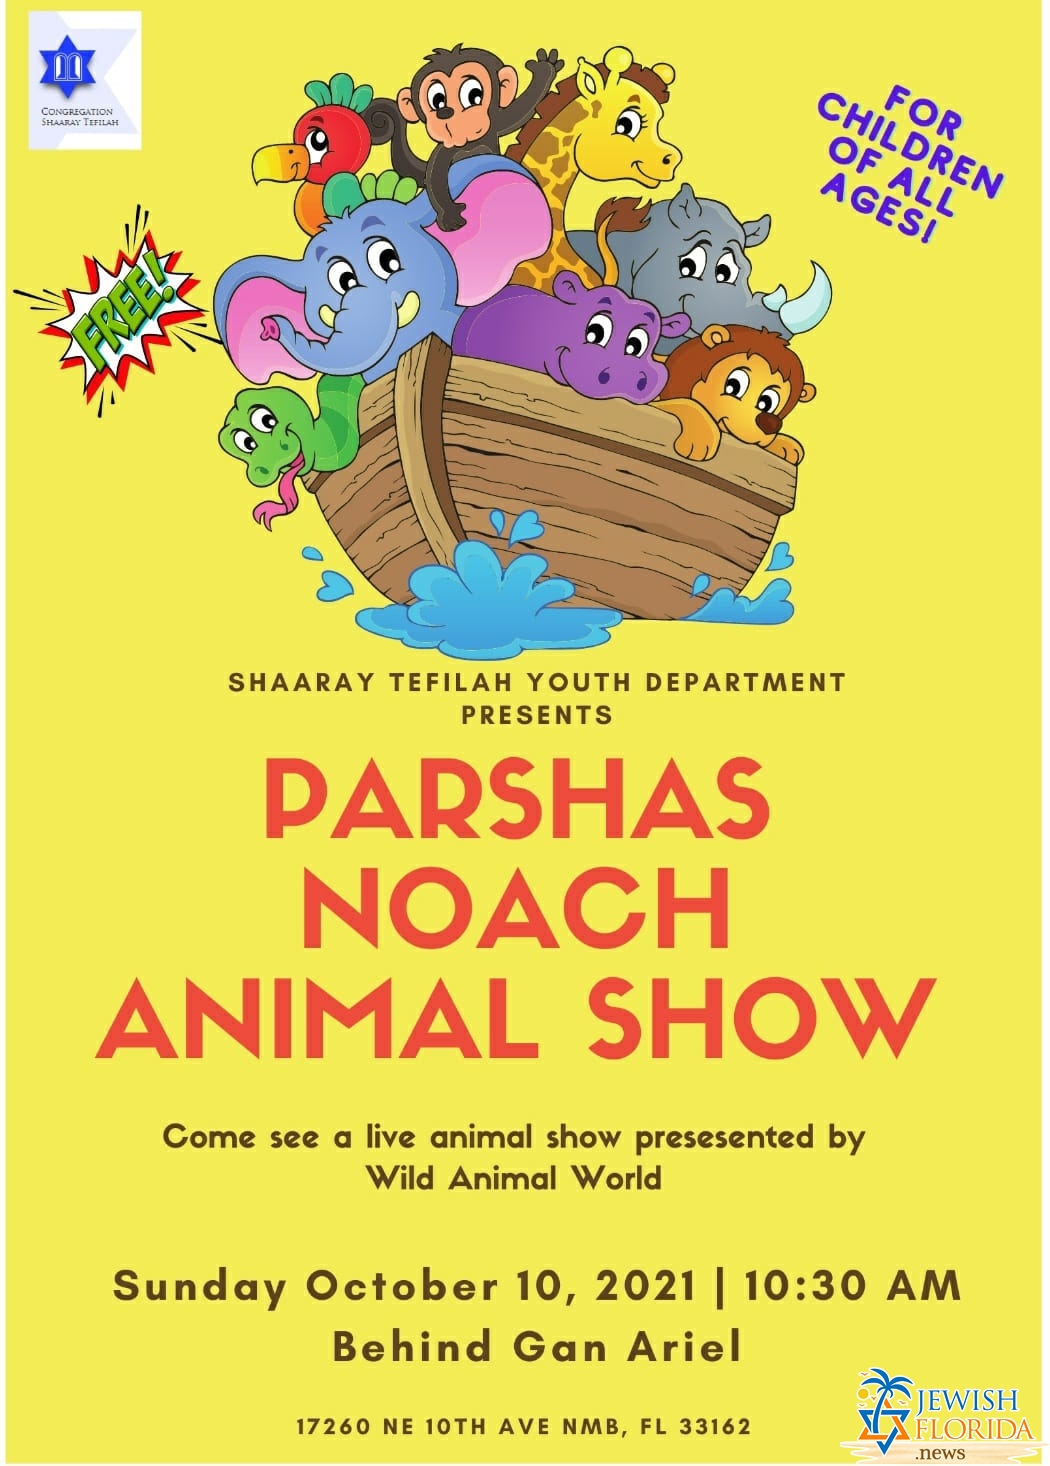 PARSHAS NOACH ANIMAL SHOW